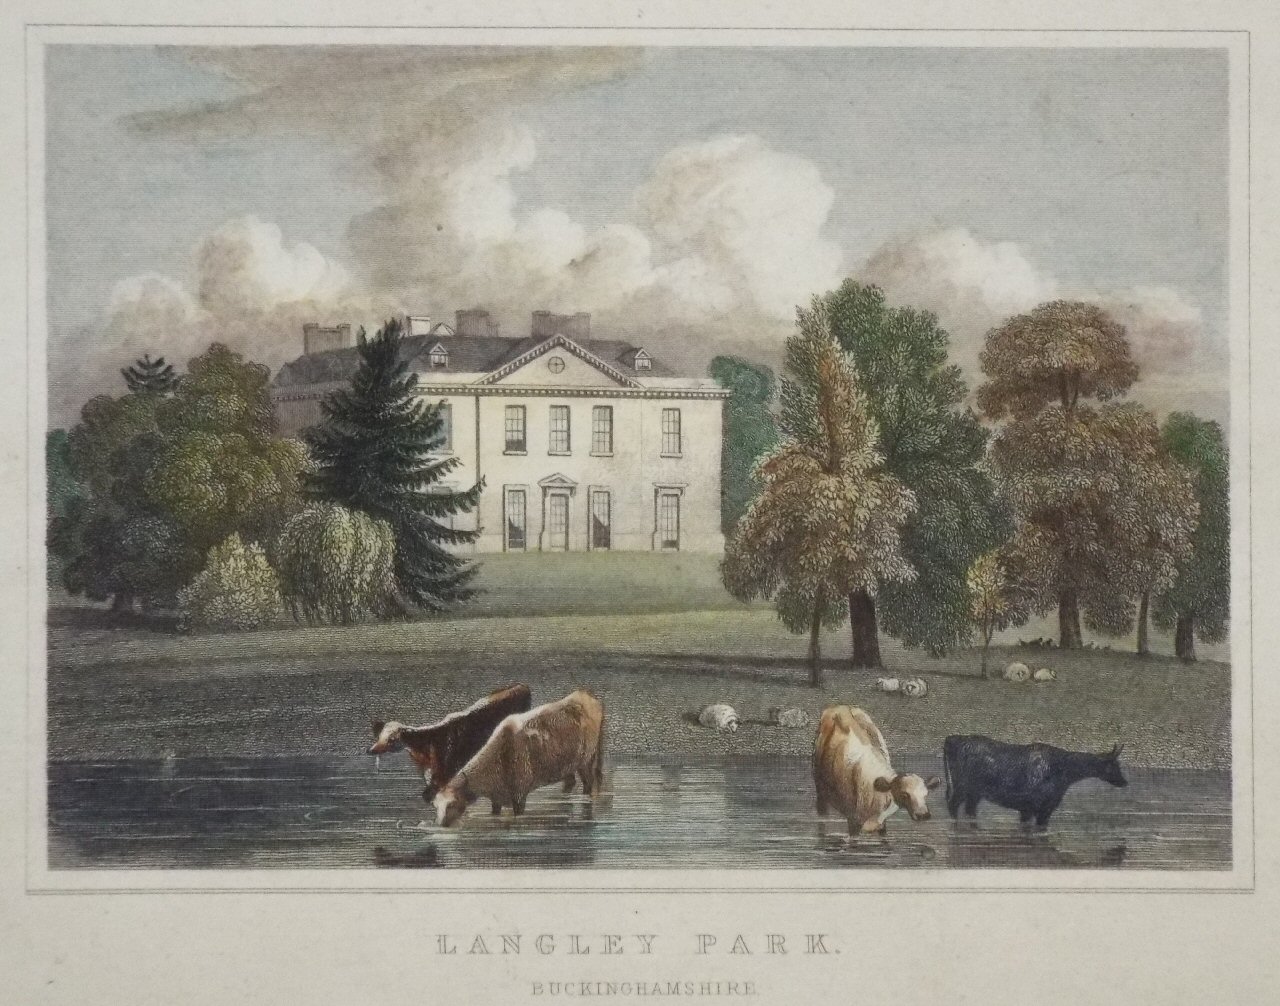 Print - Langley Park, Buckinghamshire.